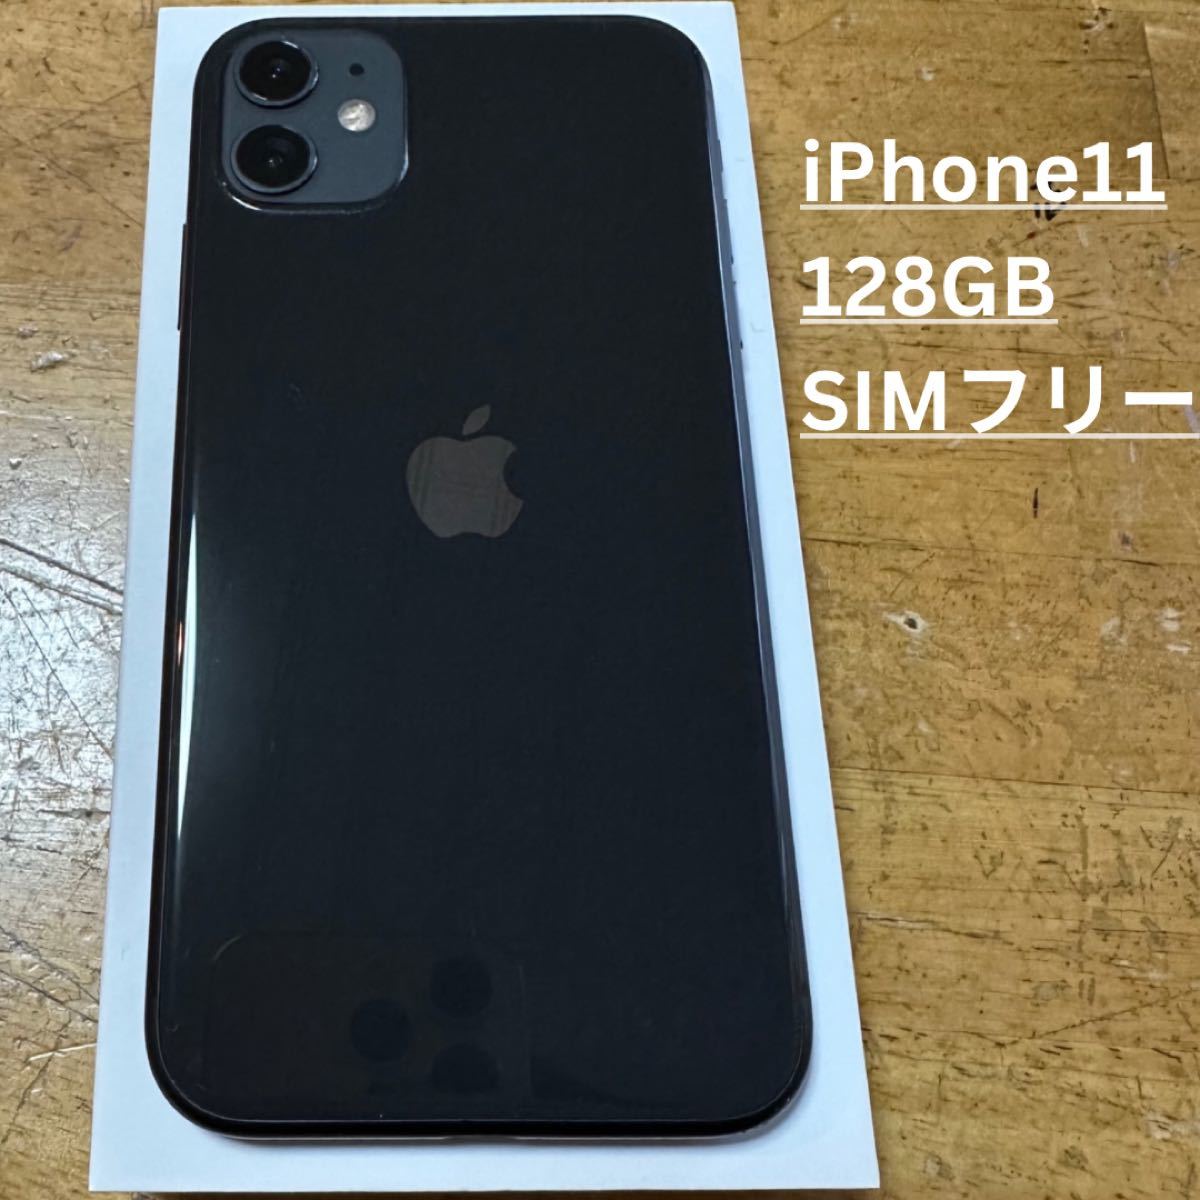 iPhone 11 本体 ブラック128GB SIMフリー | myglobaltax.com